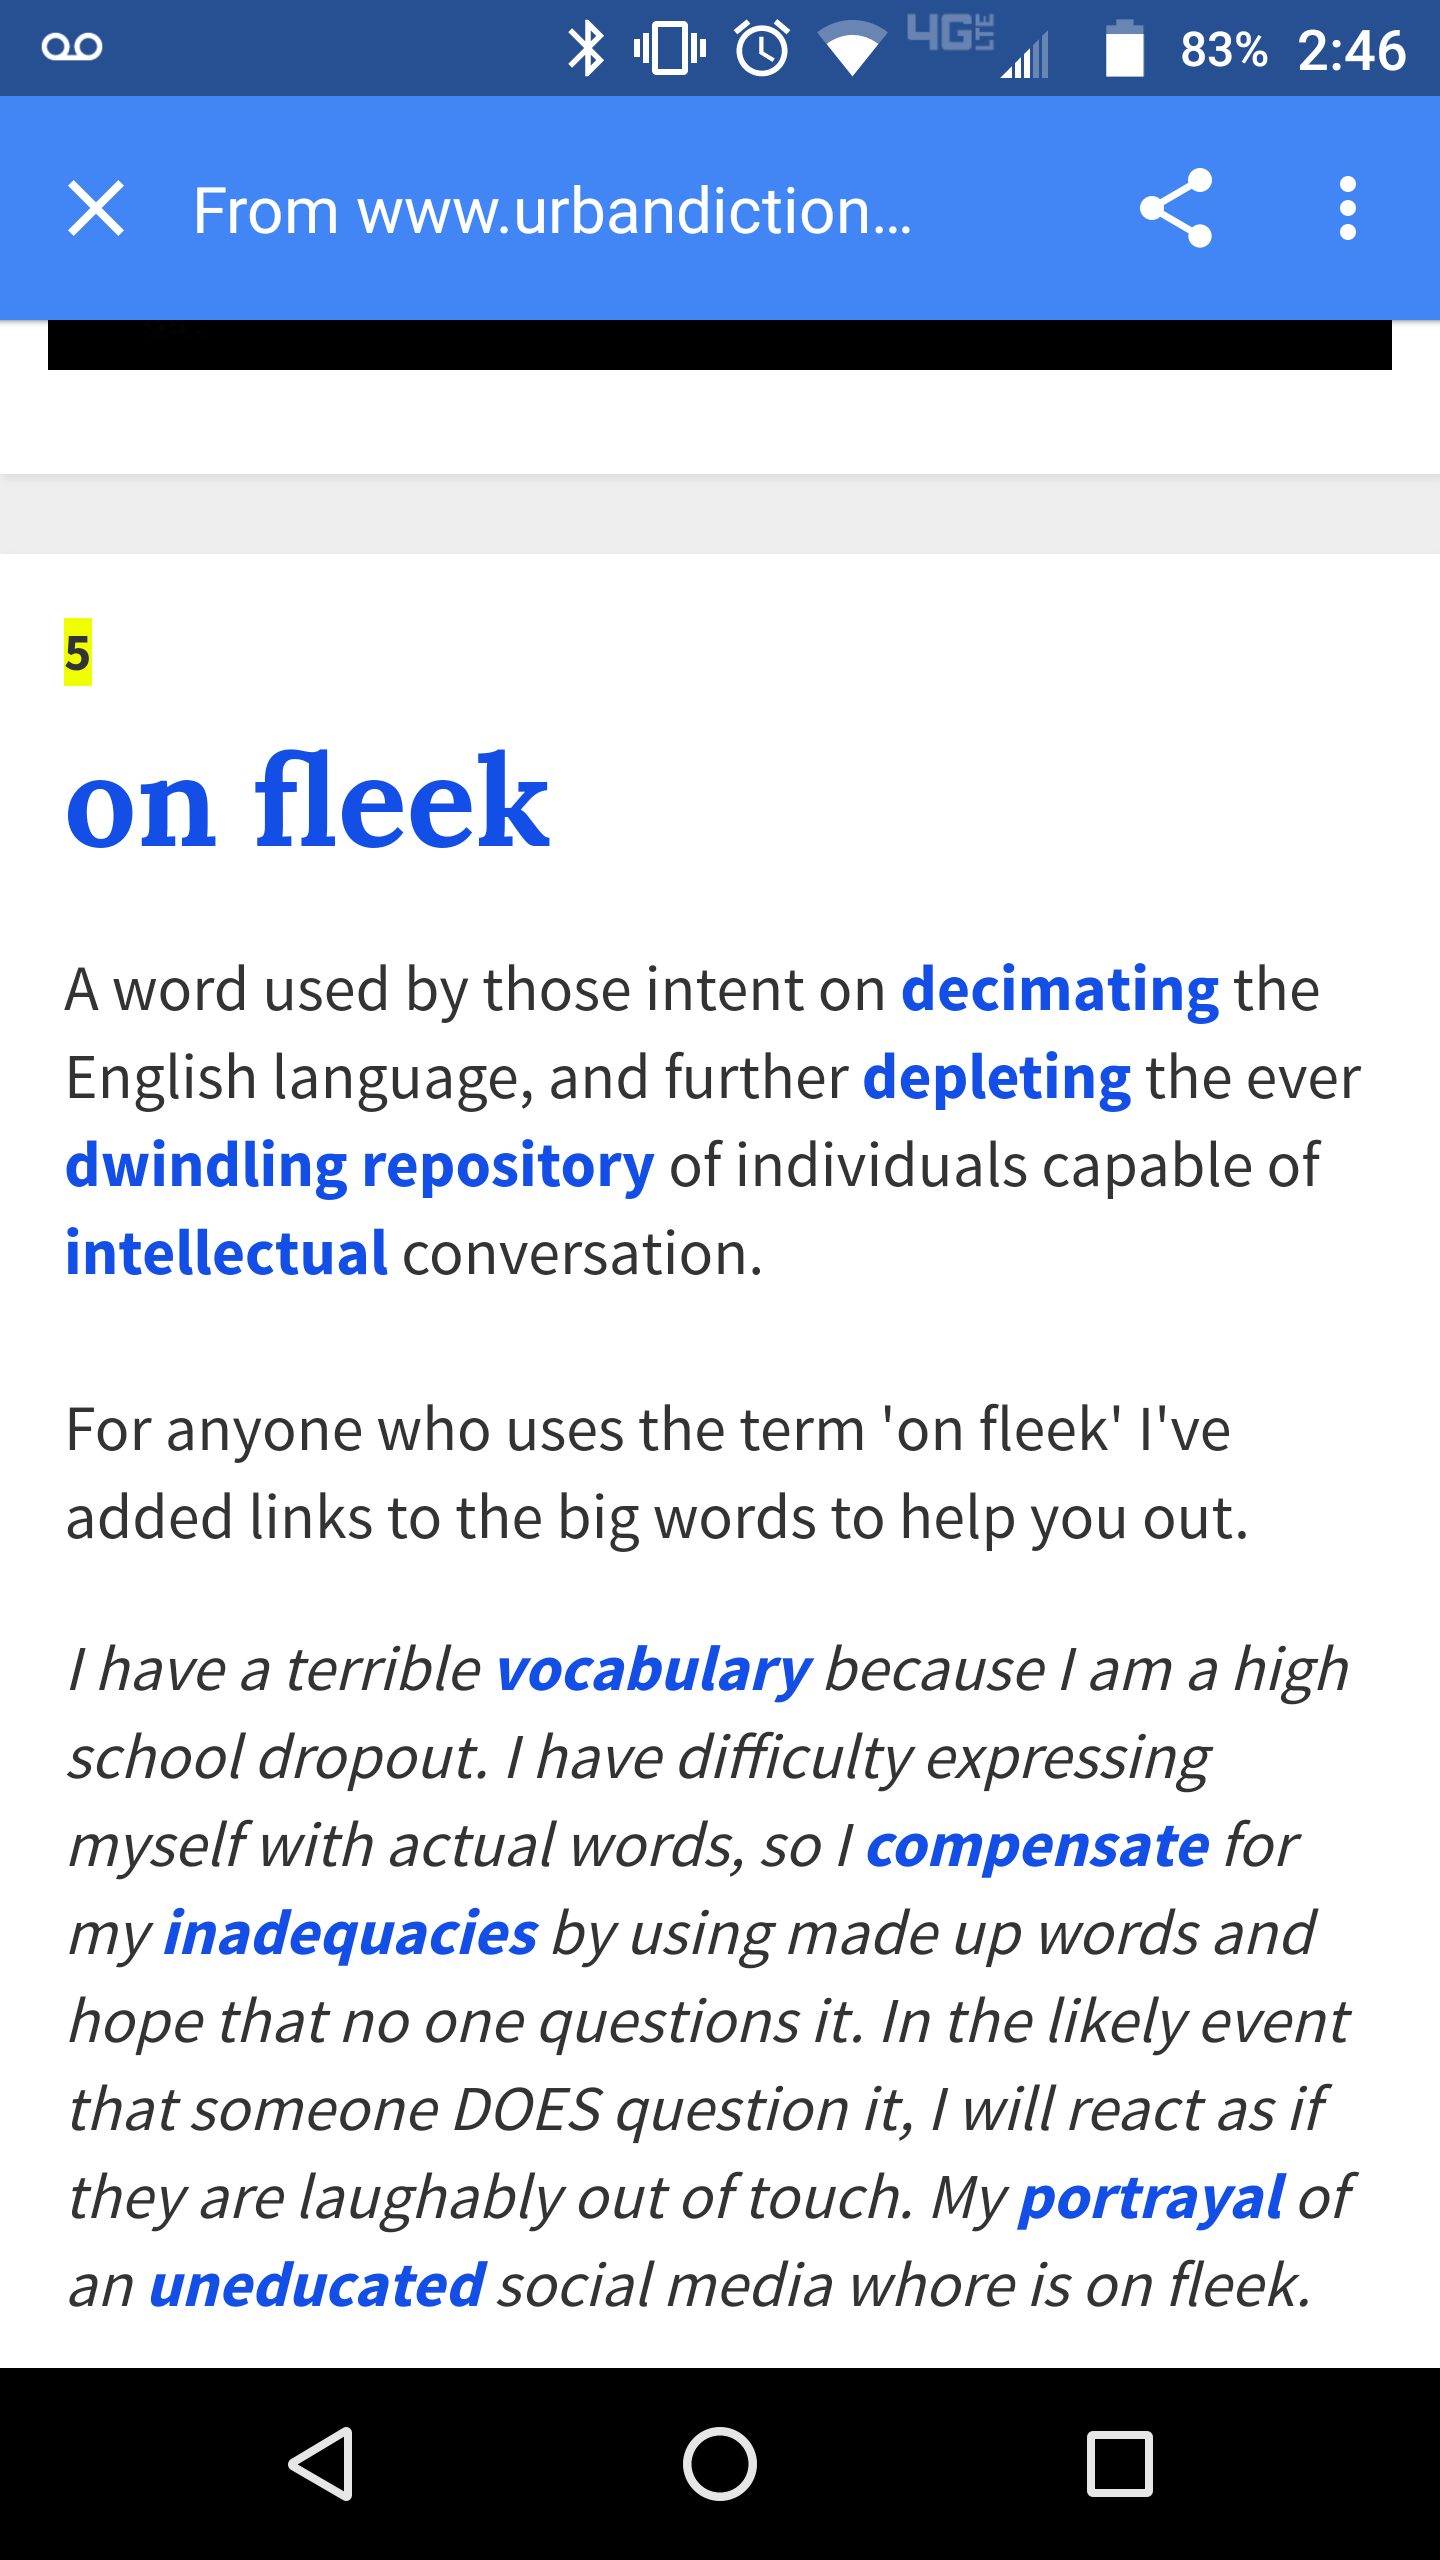 Urban Dictionary "on fleek" definition.